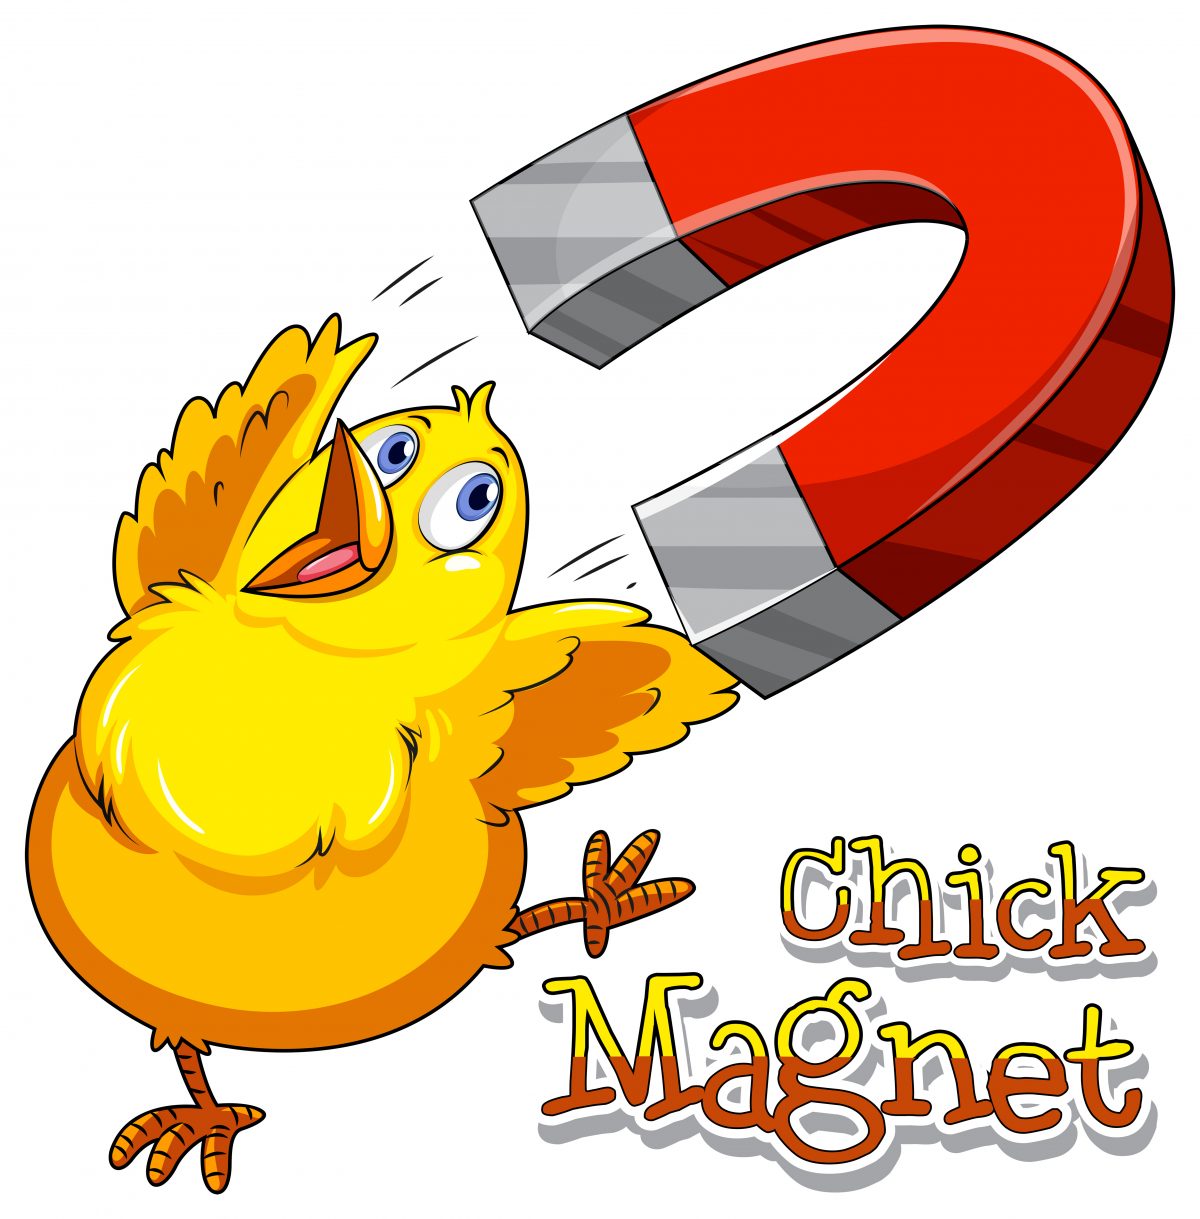 Anglické idiomy - Chick magnet